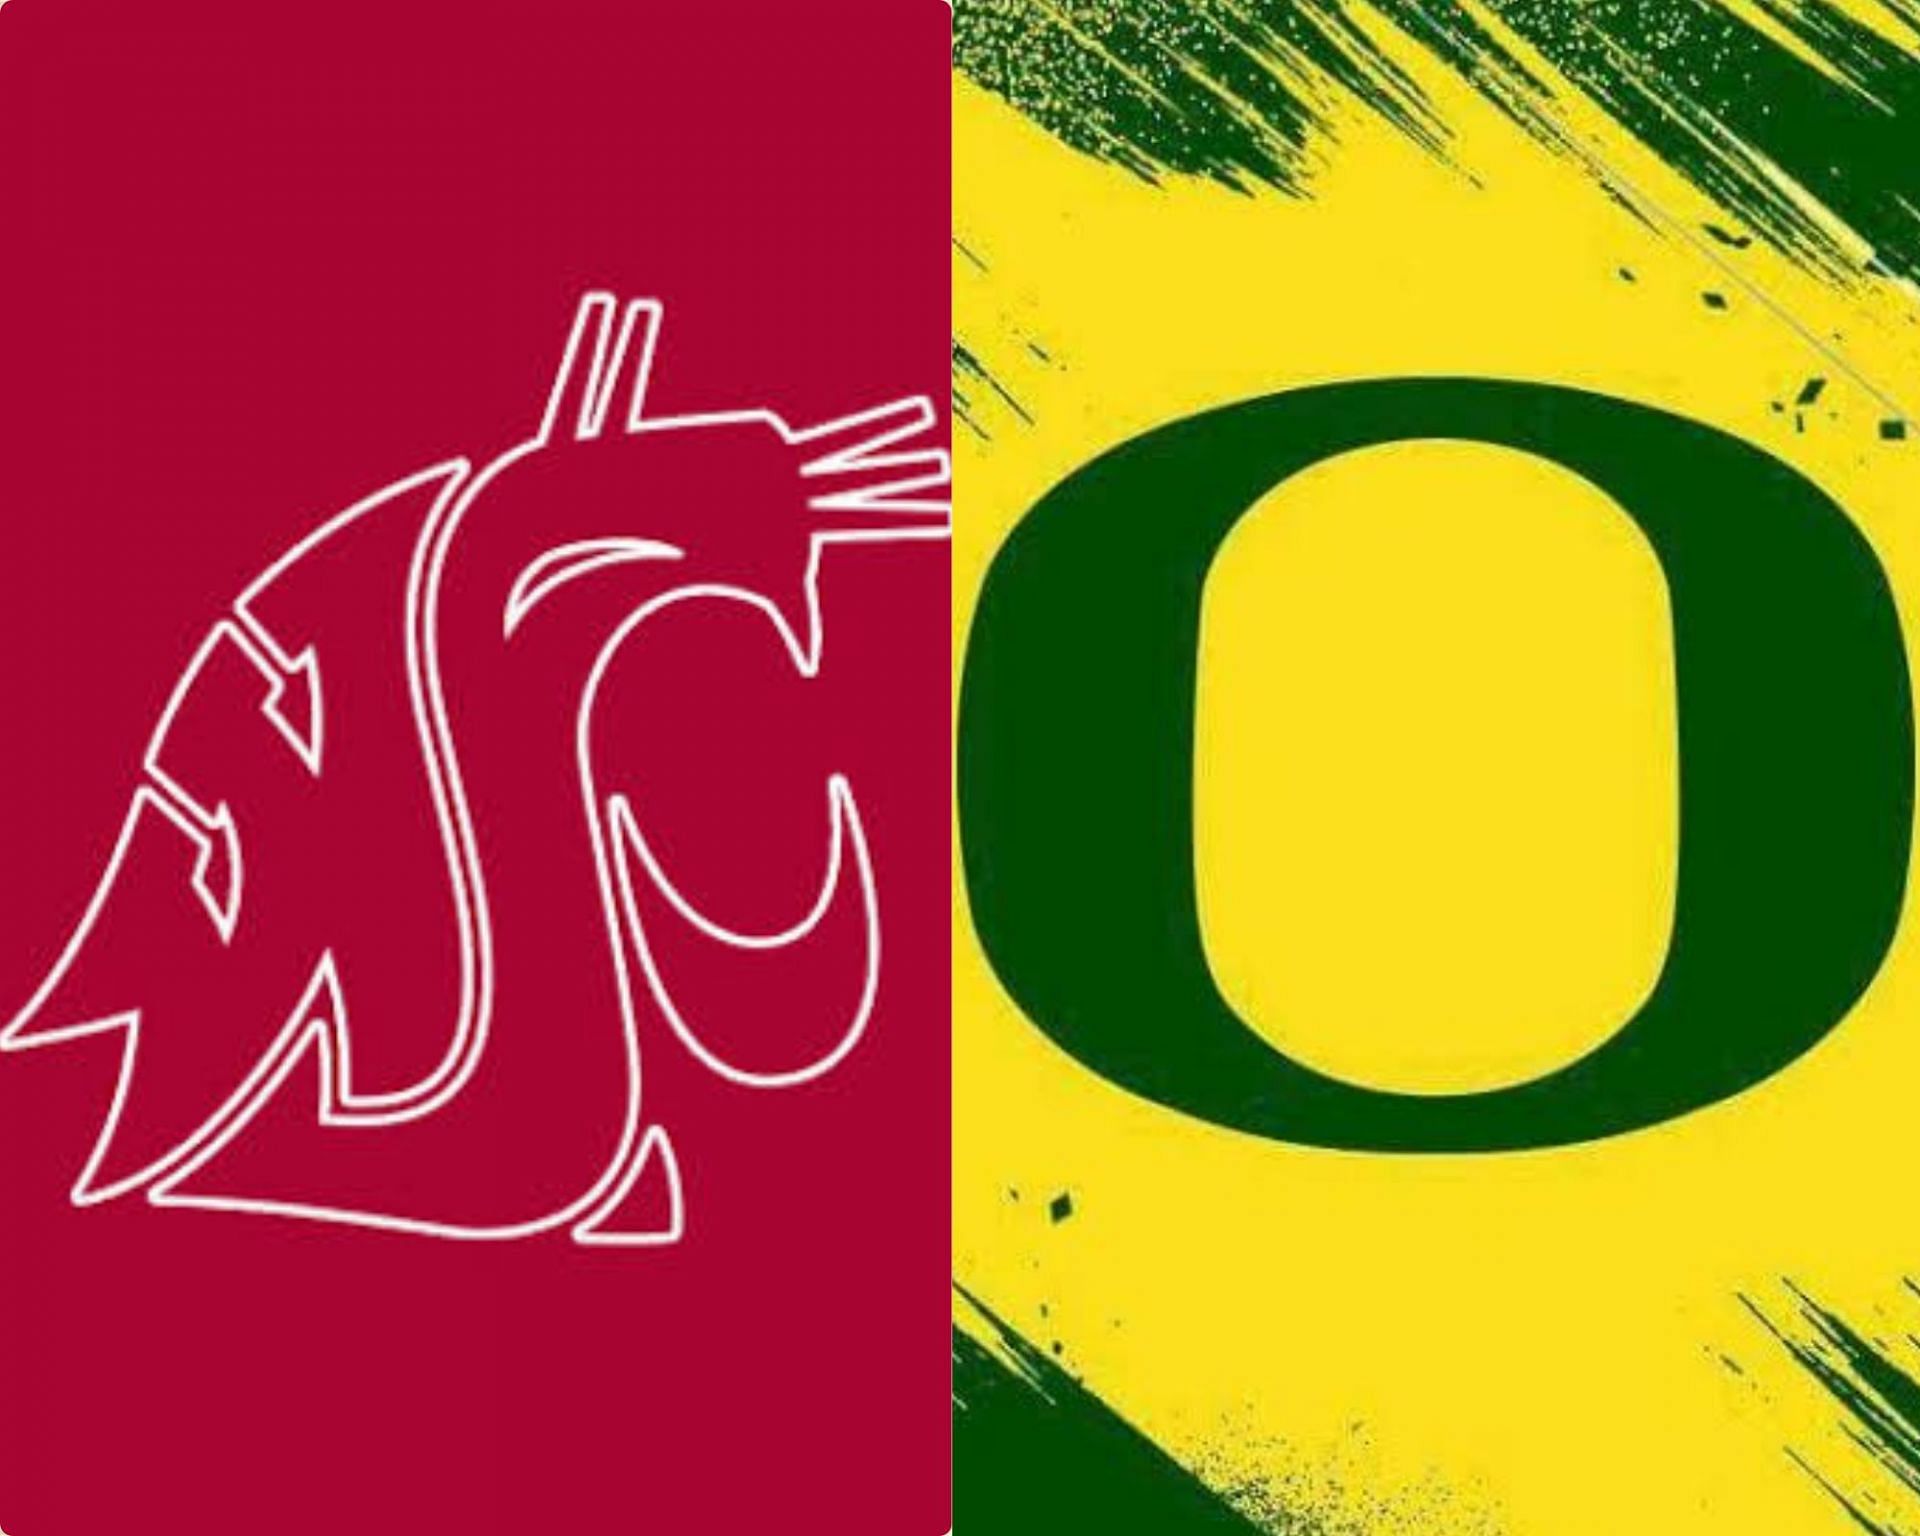 Oregon State vs. Washington State live stream, TV channel, watch